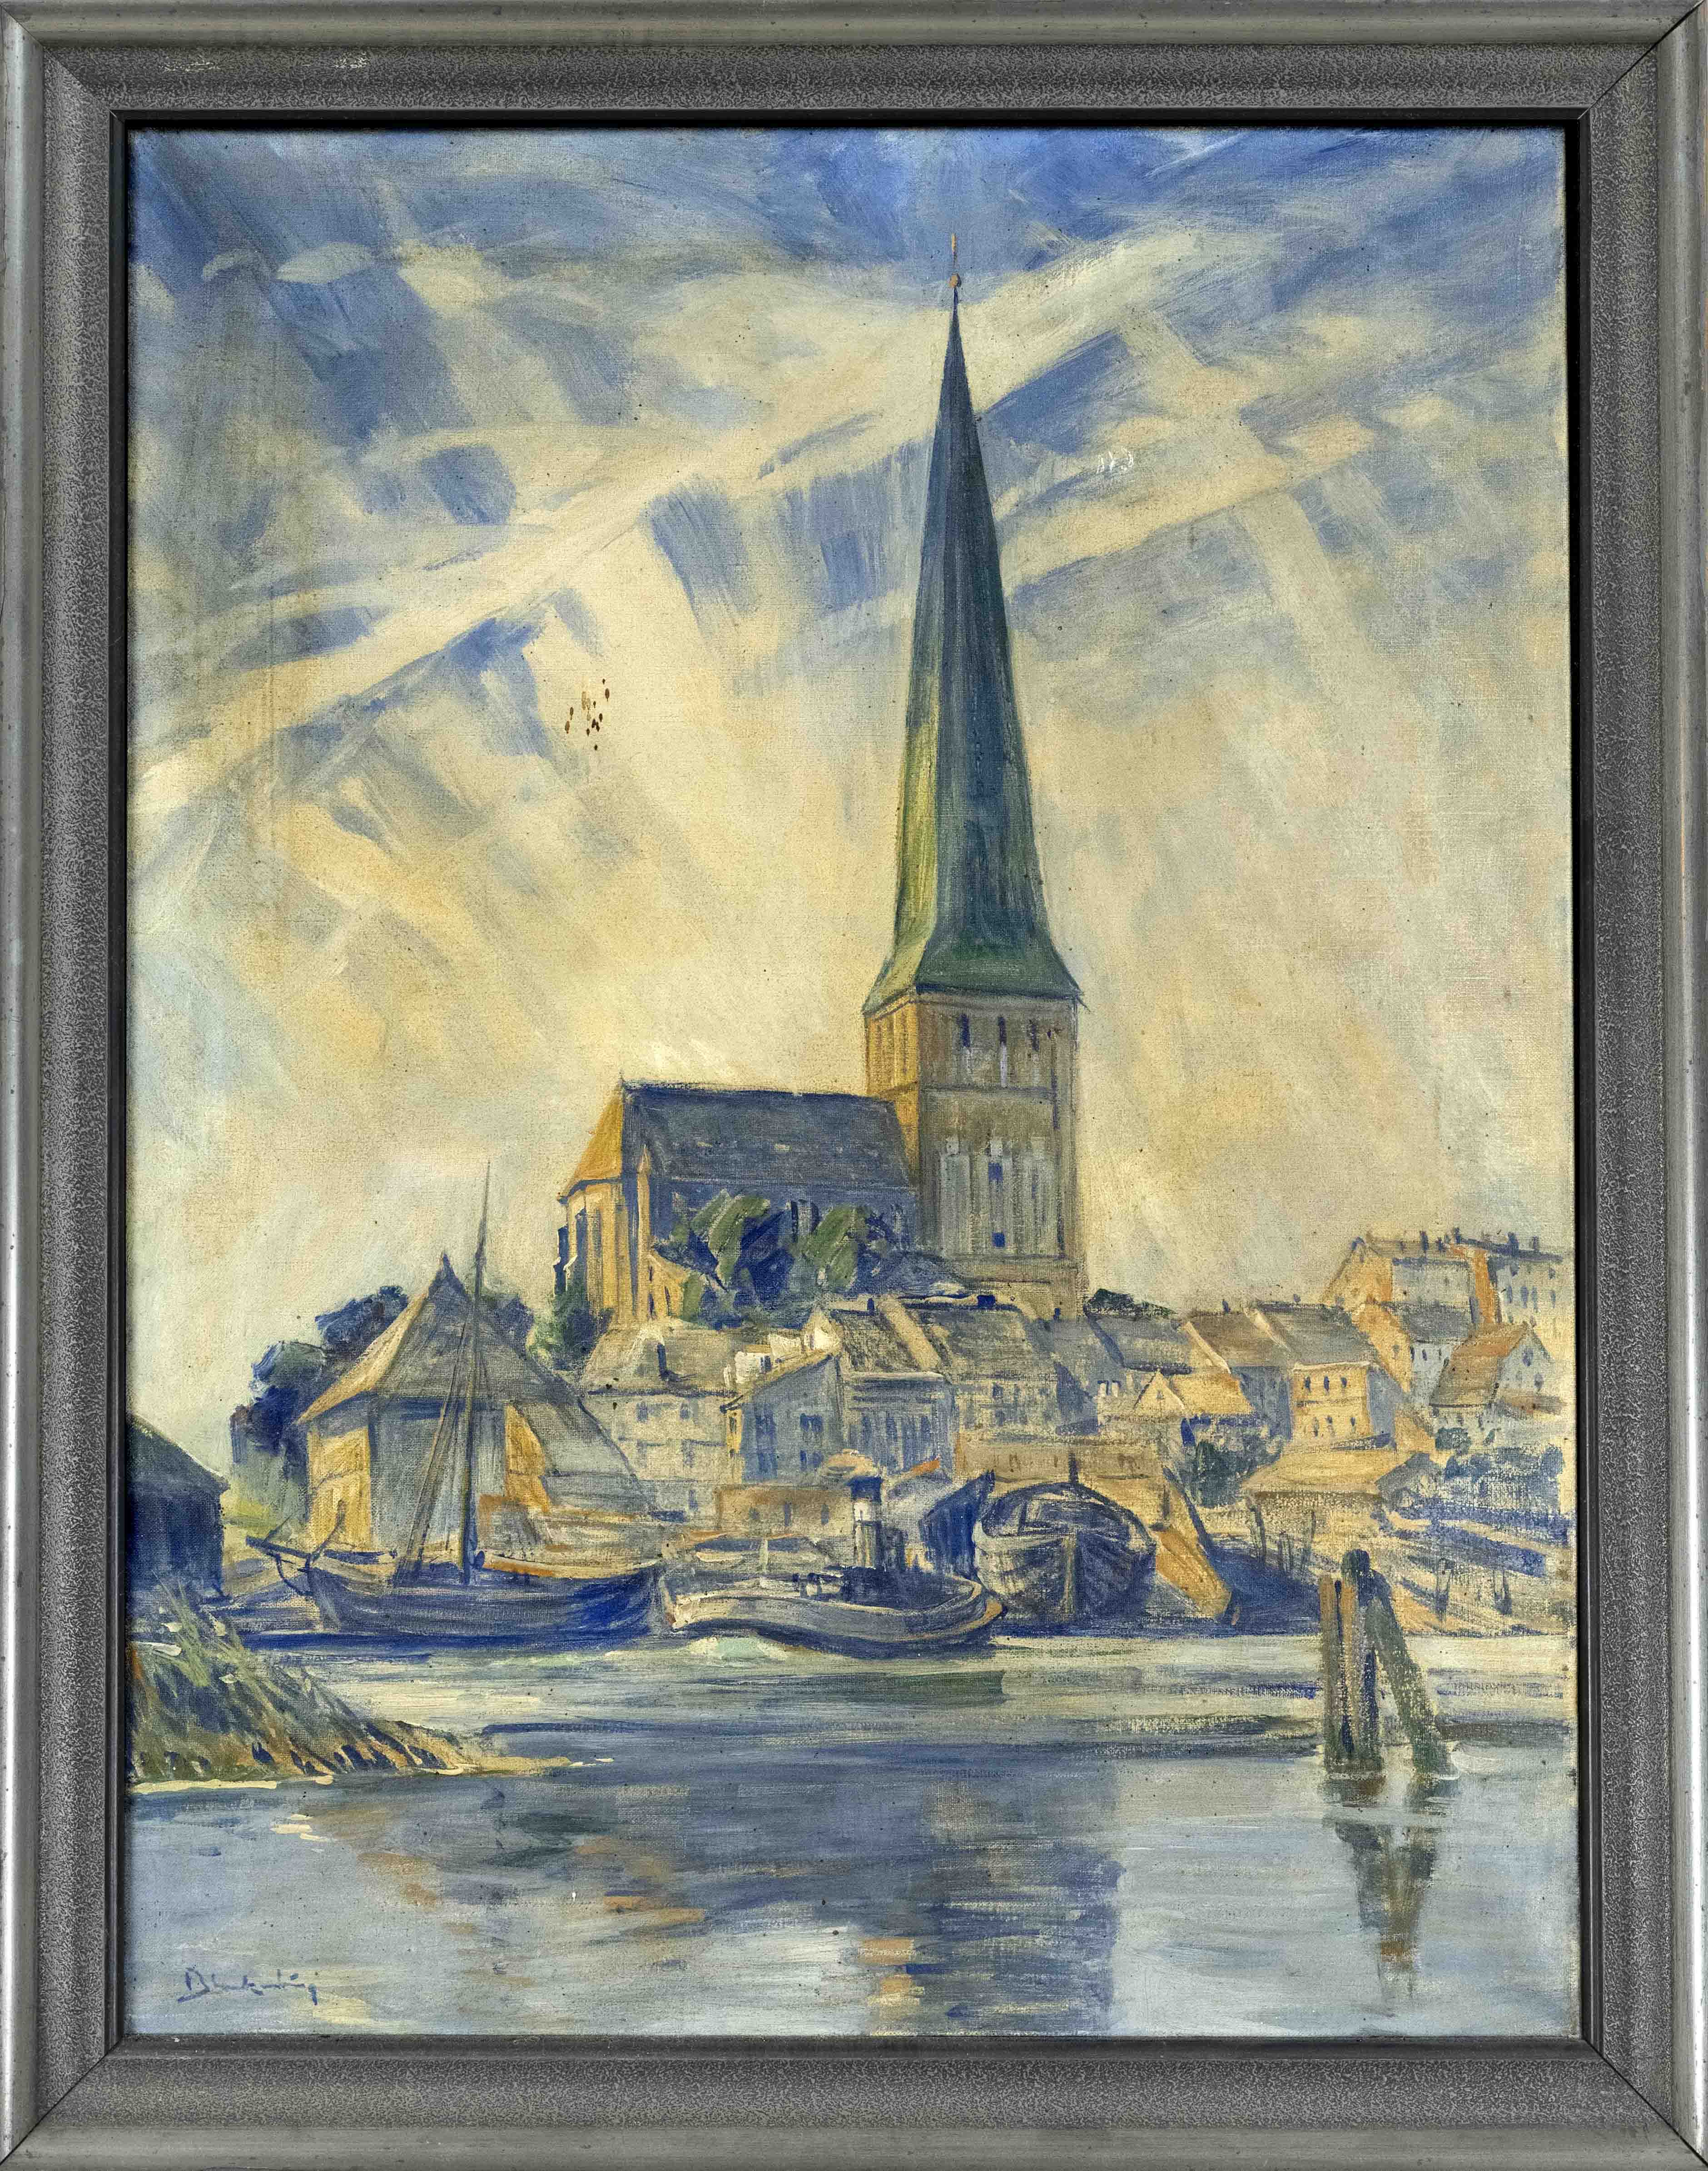 Richard Blankenburg (1891-1955), landscape painter from Frankfurt/Oder who worked in Rostock. View